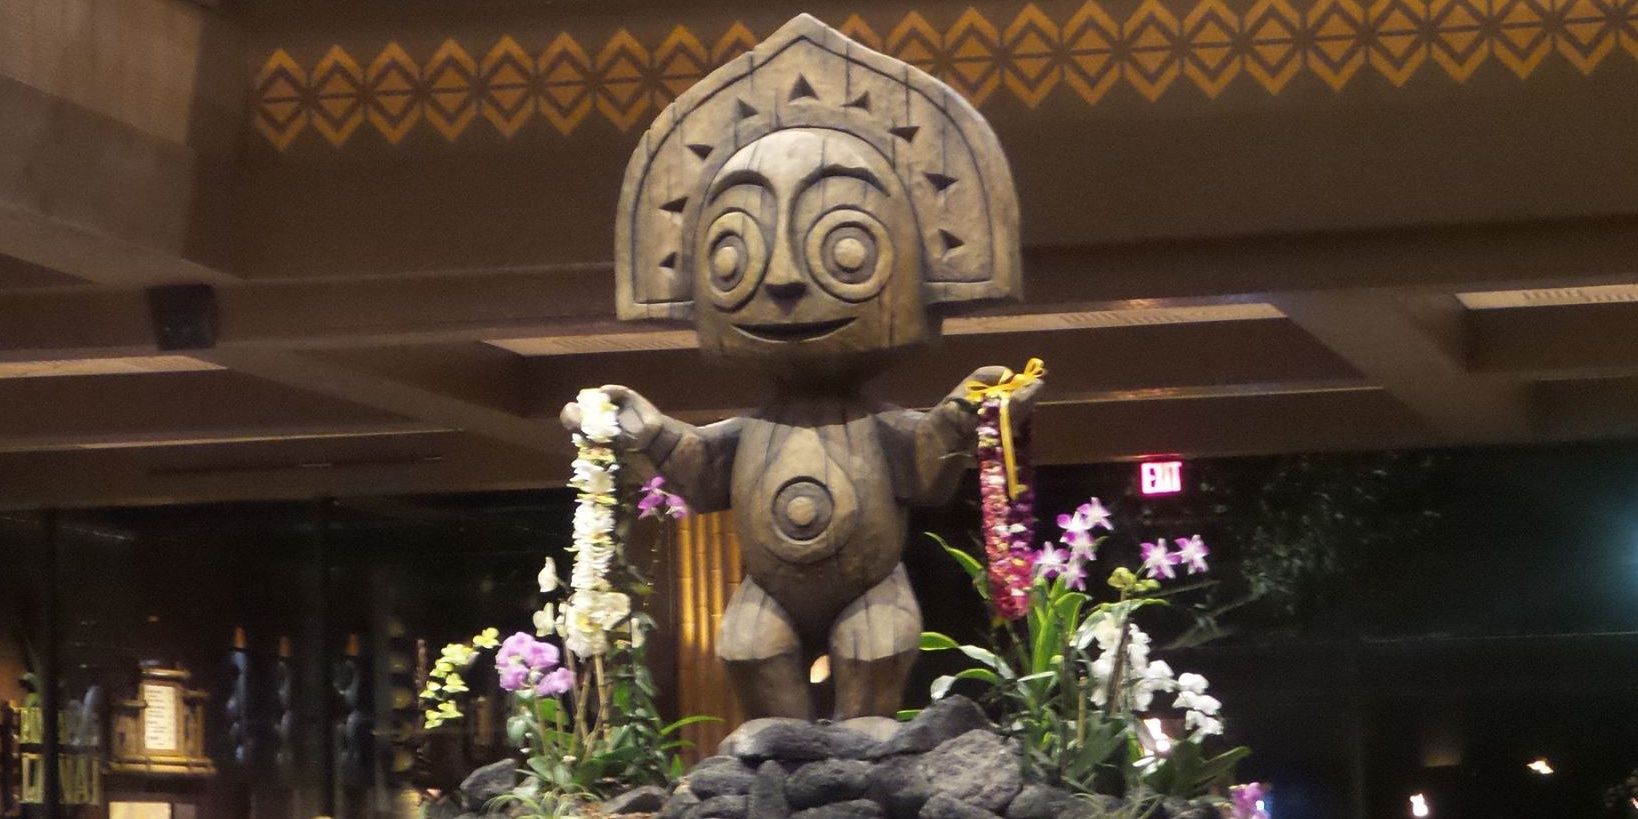 Maui the Tikiman in Disney's Polynesian Resort